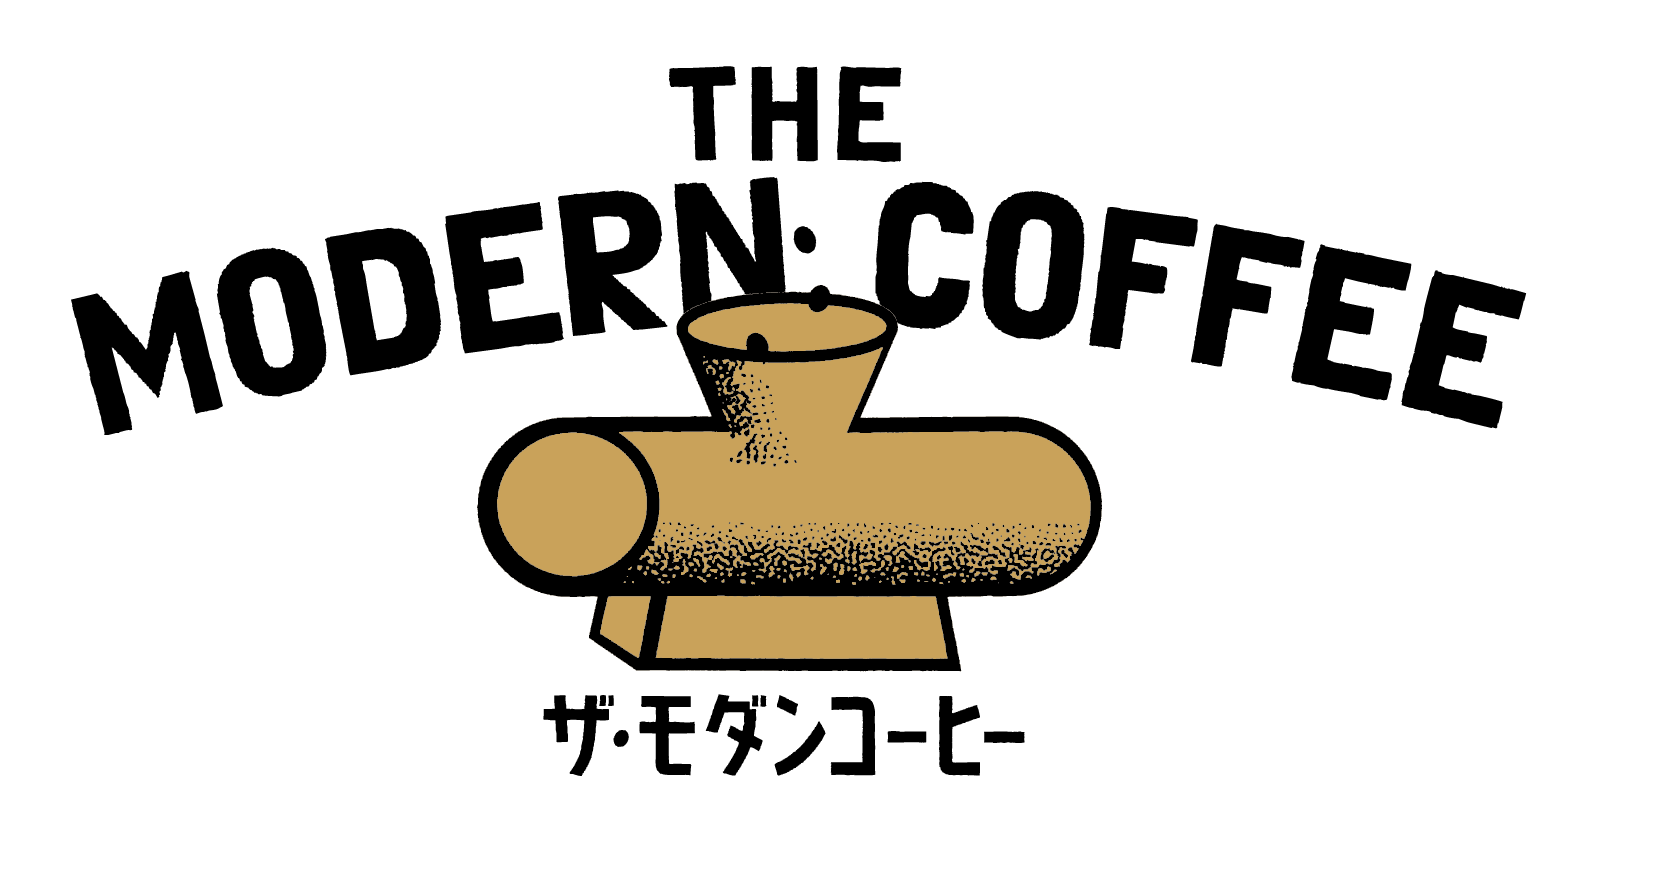 THE MODERN COFFEE